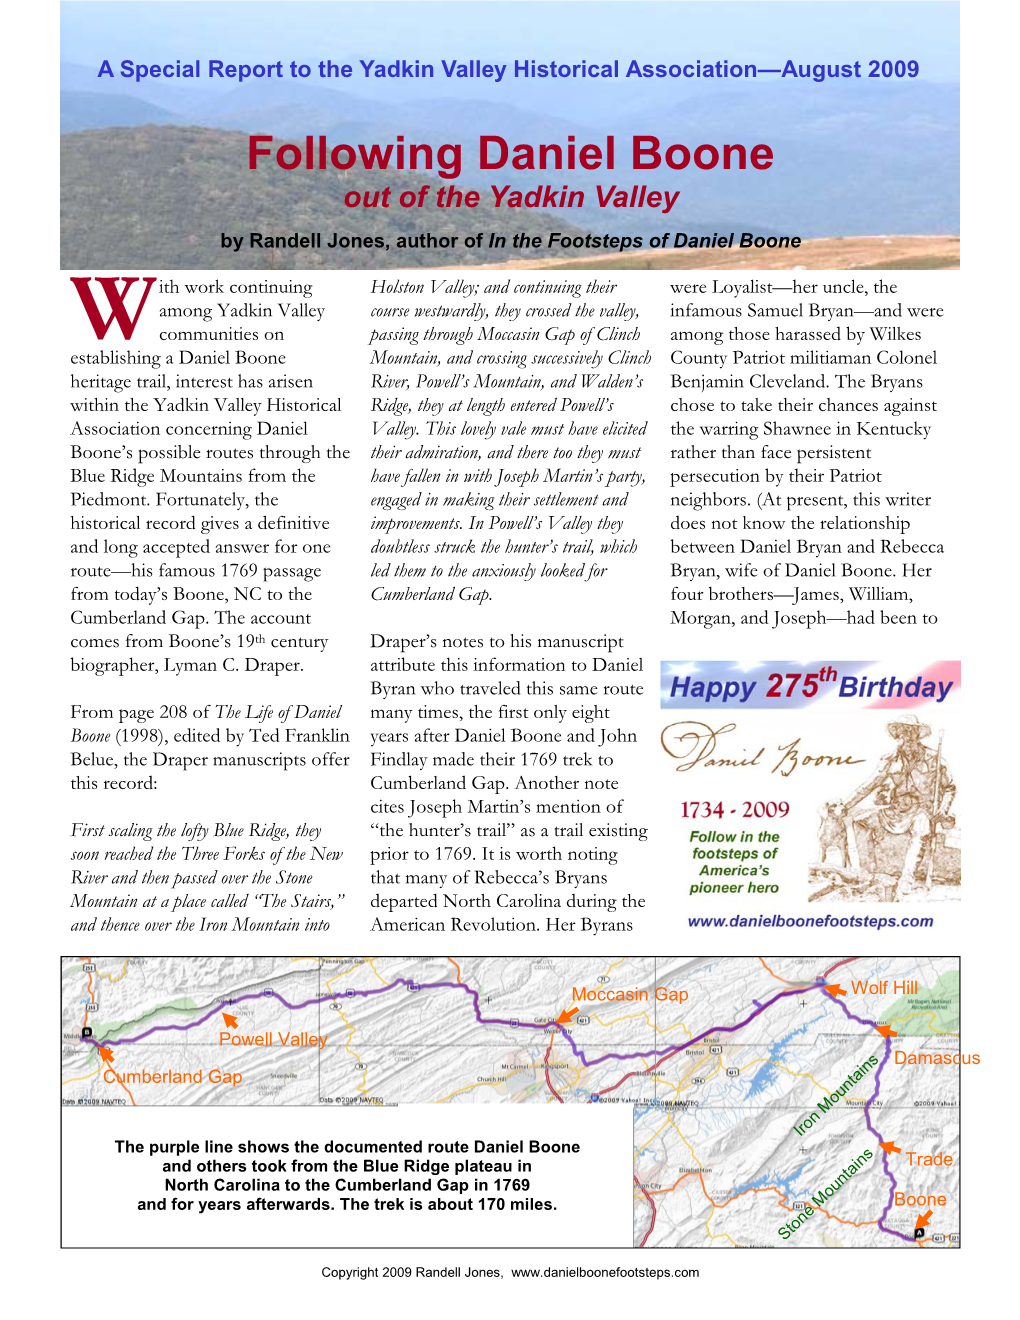 Following Daniel Boone out of the Yadkin Valley